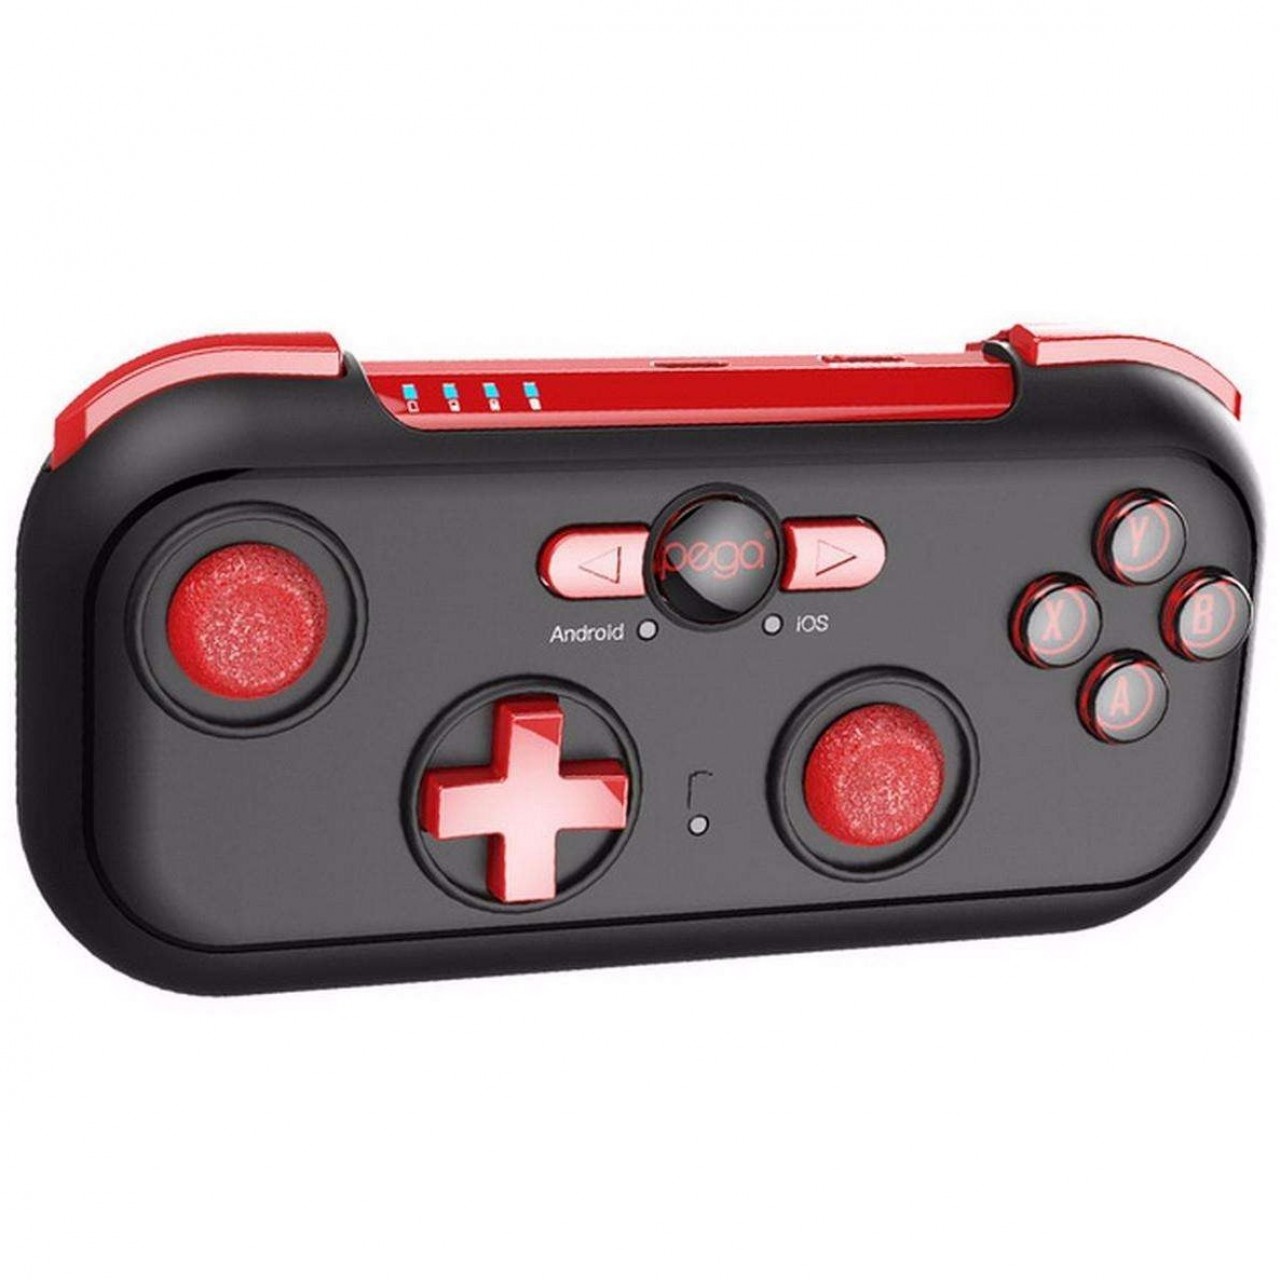 IPega PG-9085 Bluetooth Game Pad Joystick - Red